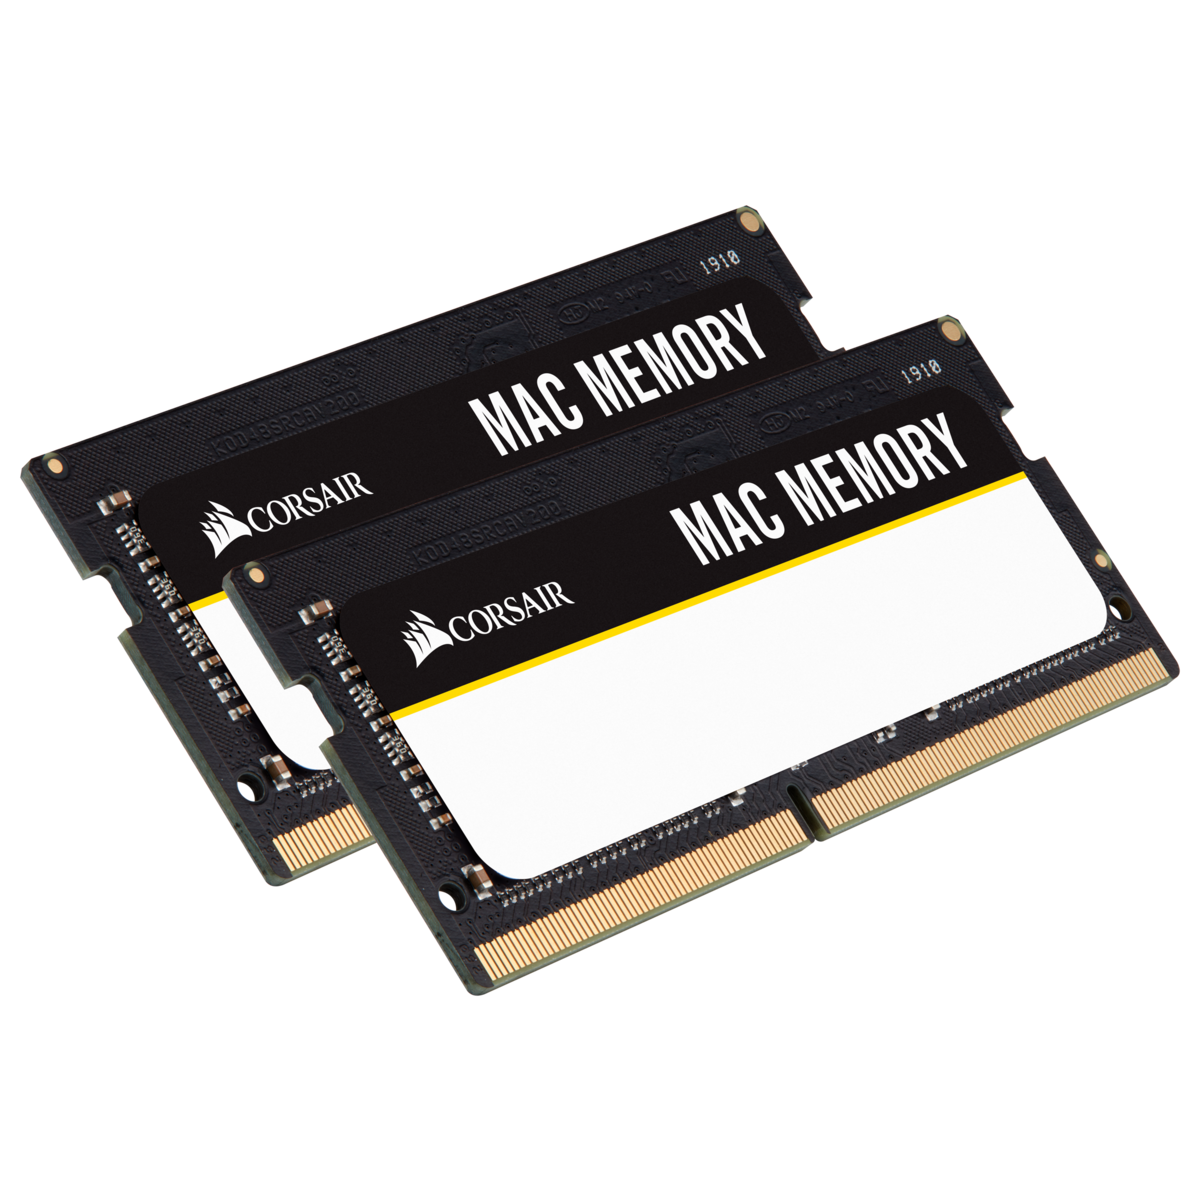 CORSAIR Mac Memory 64GB (2 x 32GB) DDR4 2666MHz C18 Memory Kit (CMSA64GX4M2A2666C18)